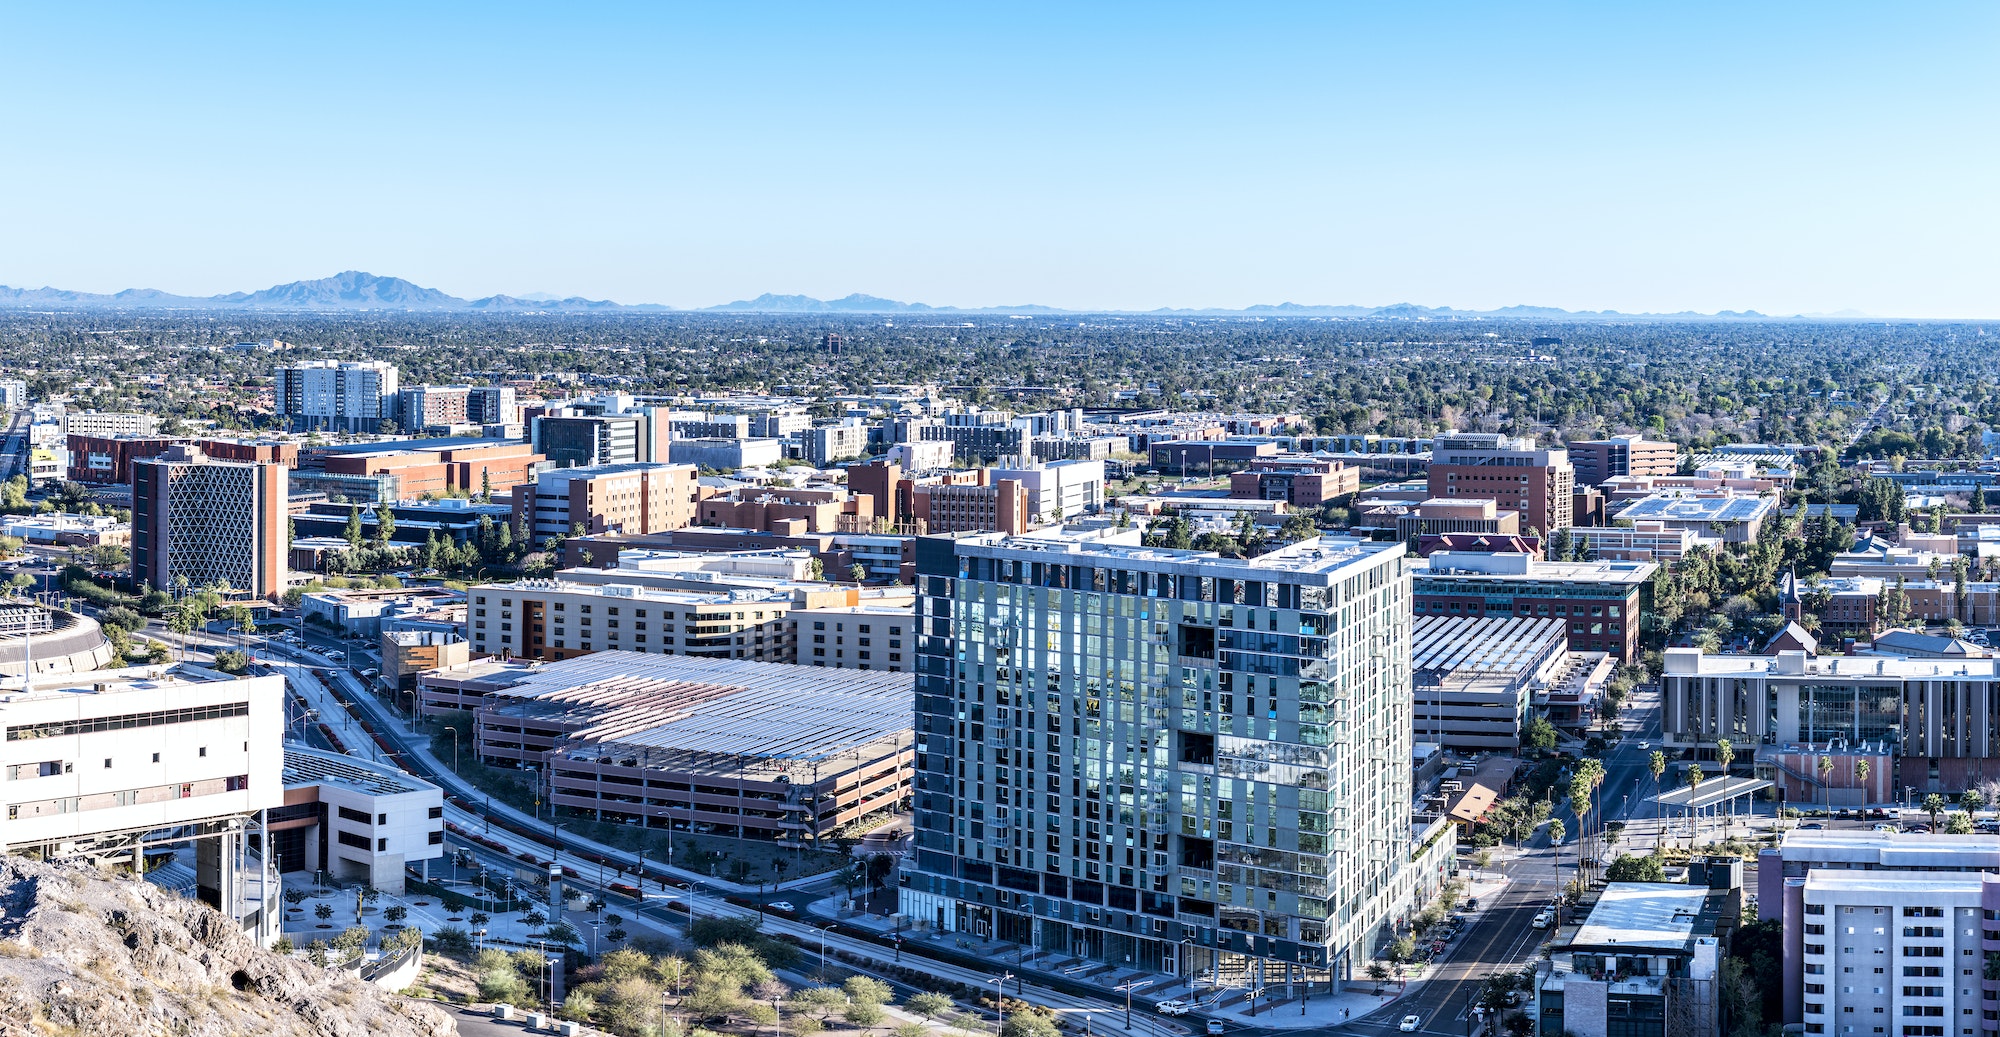 Arizona State University city overlook